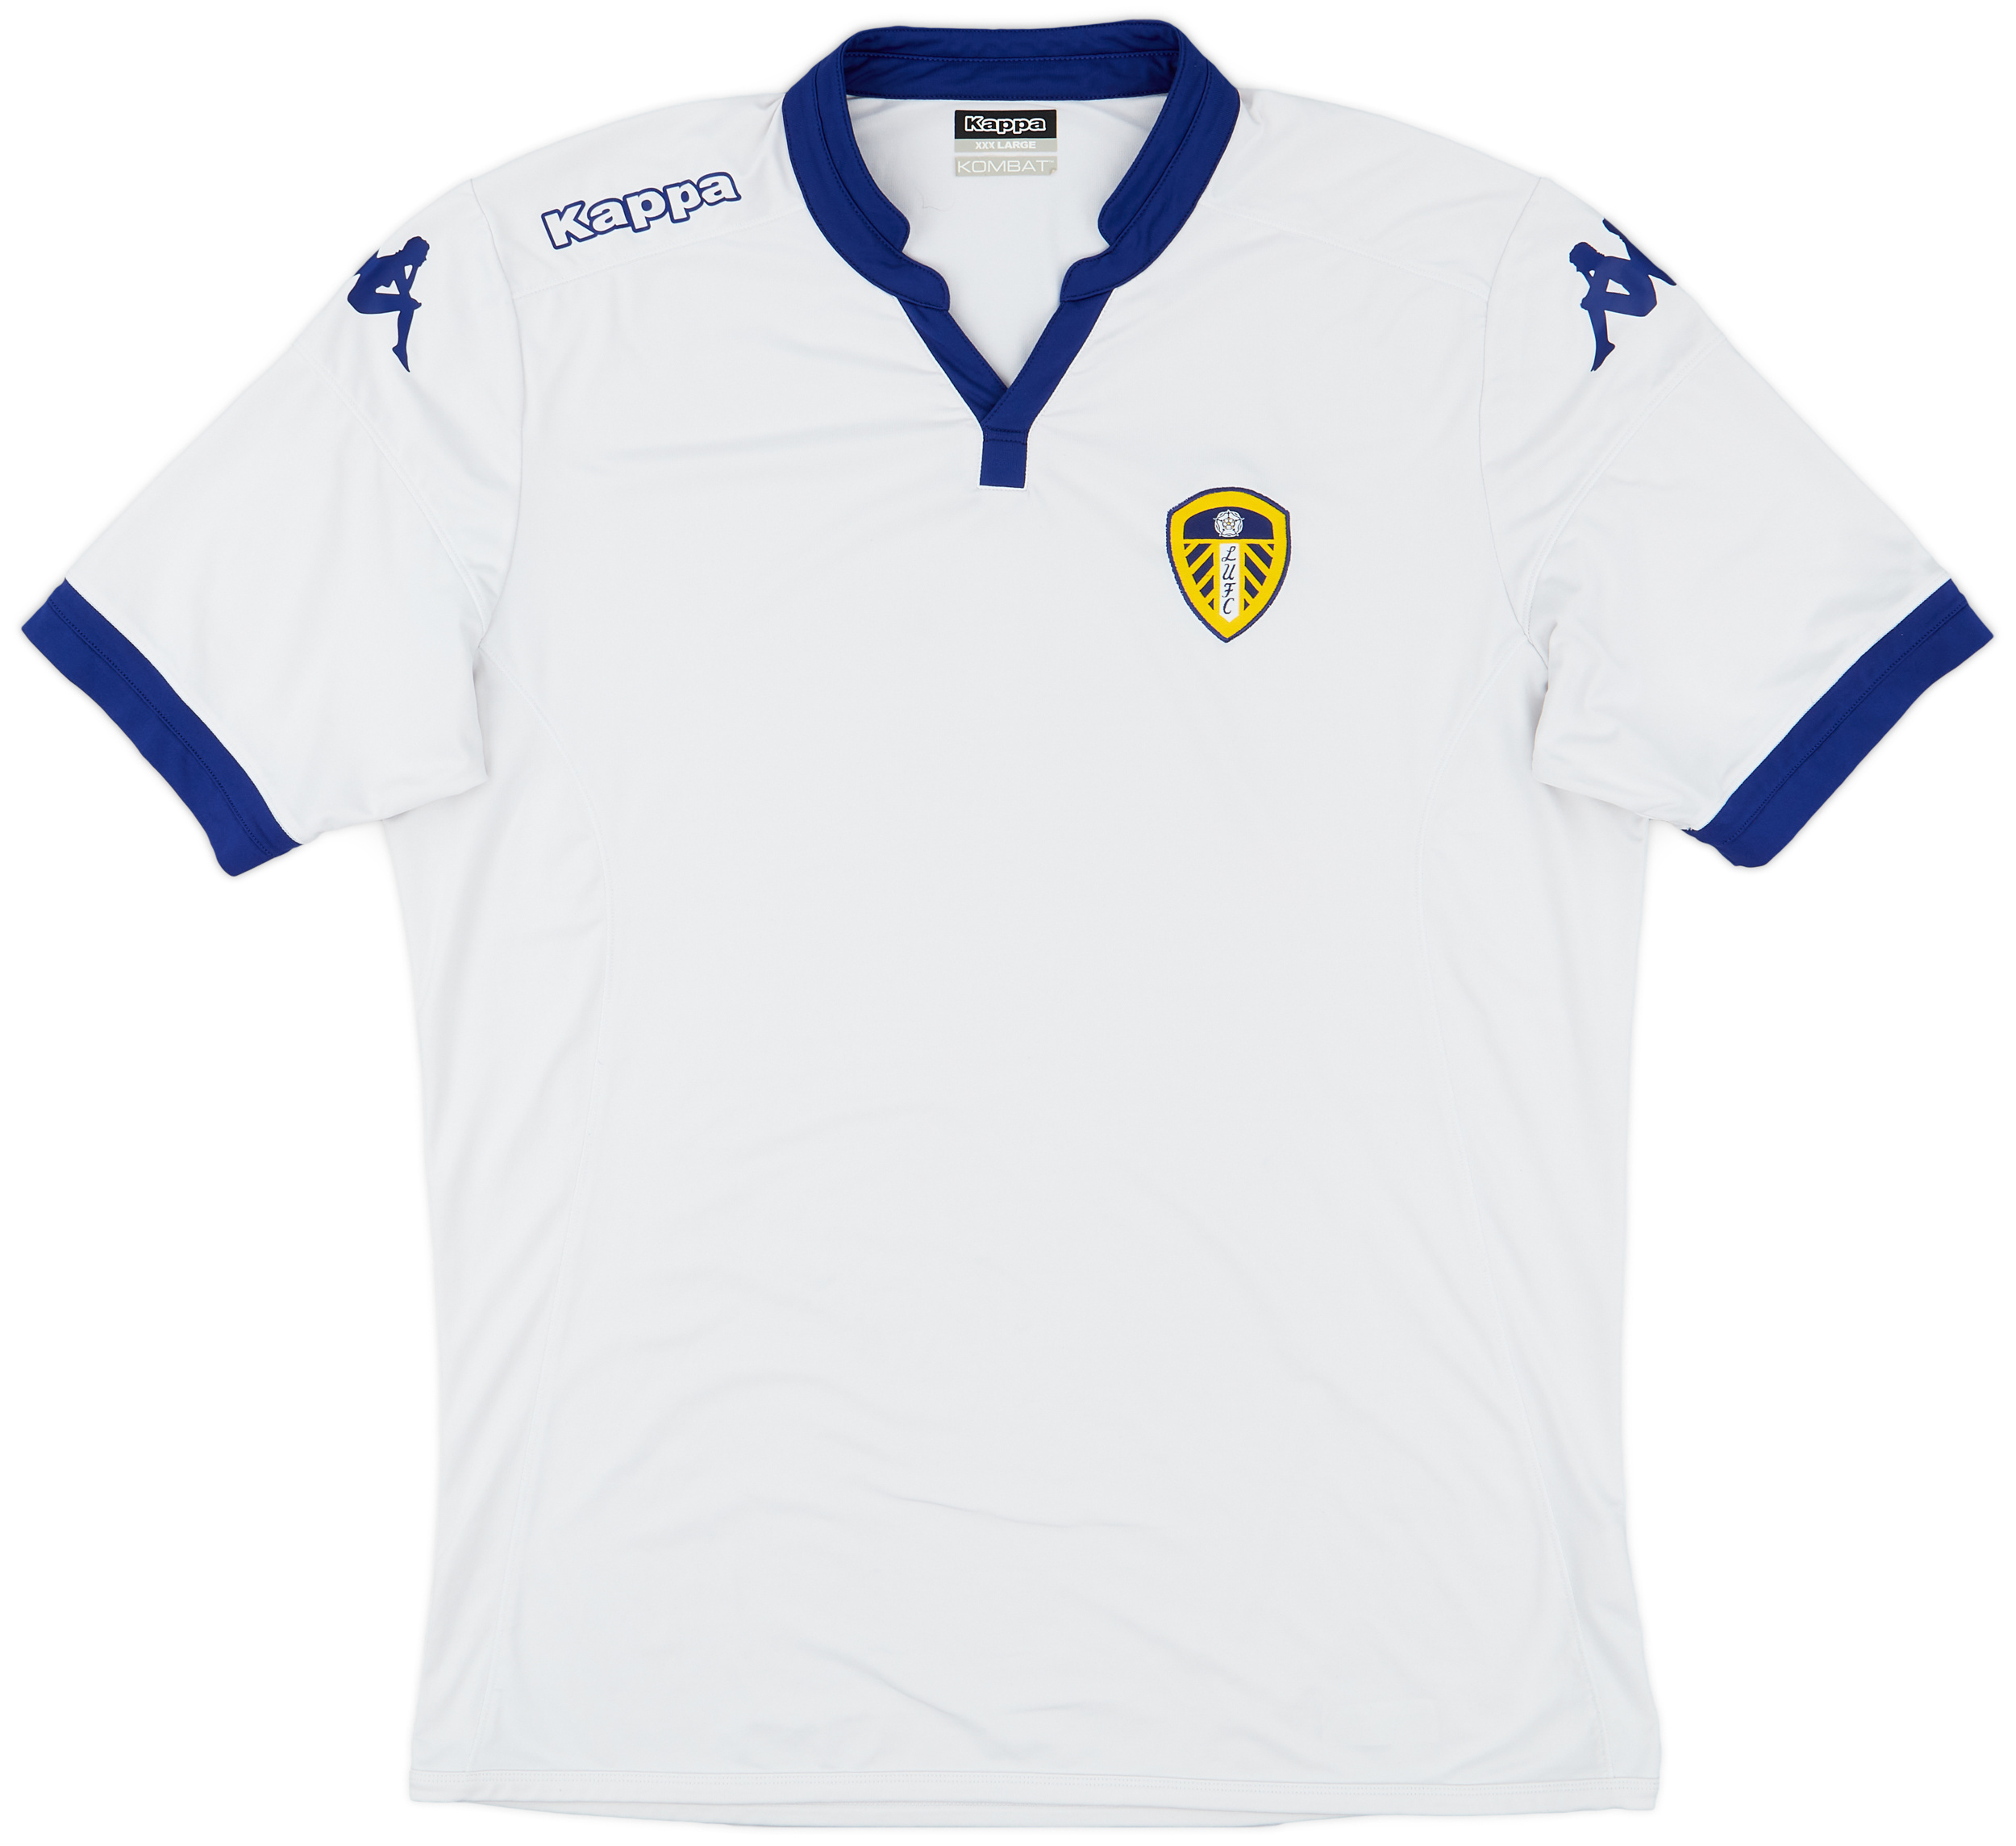 2015-16 Leeds United Home Shirt - 5/10 - ()